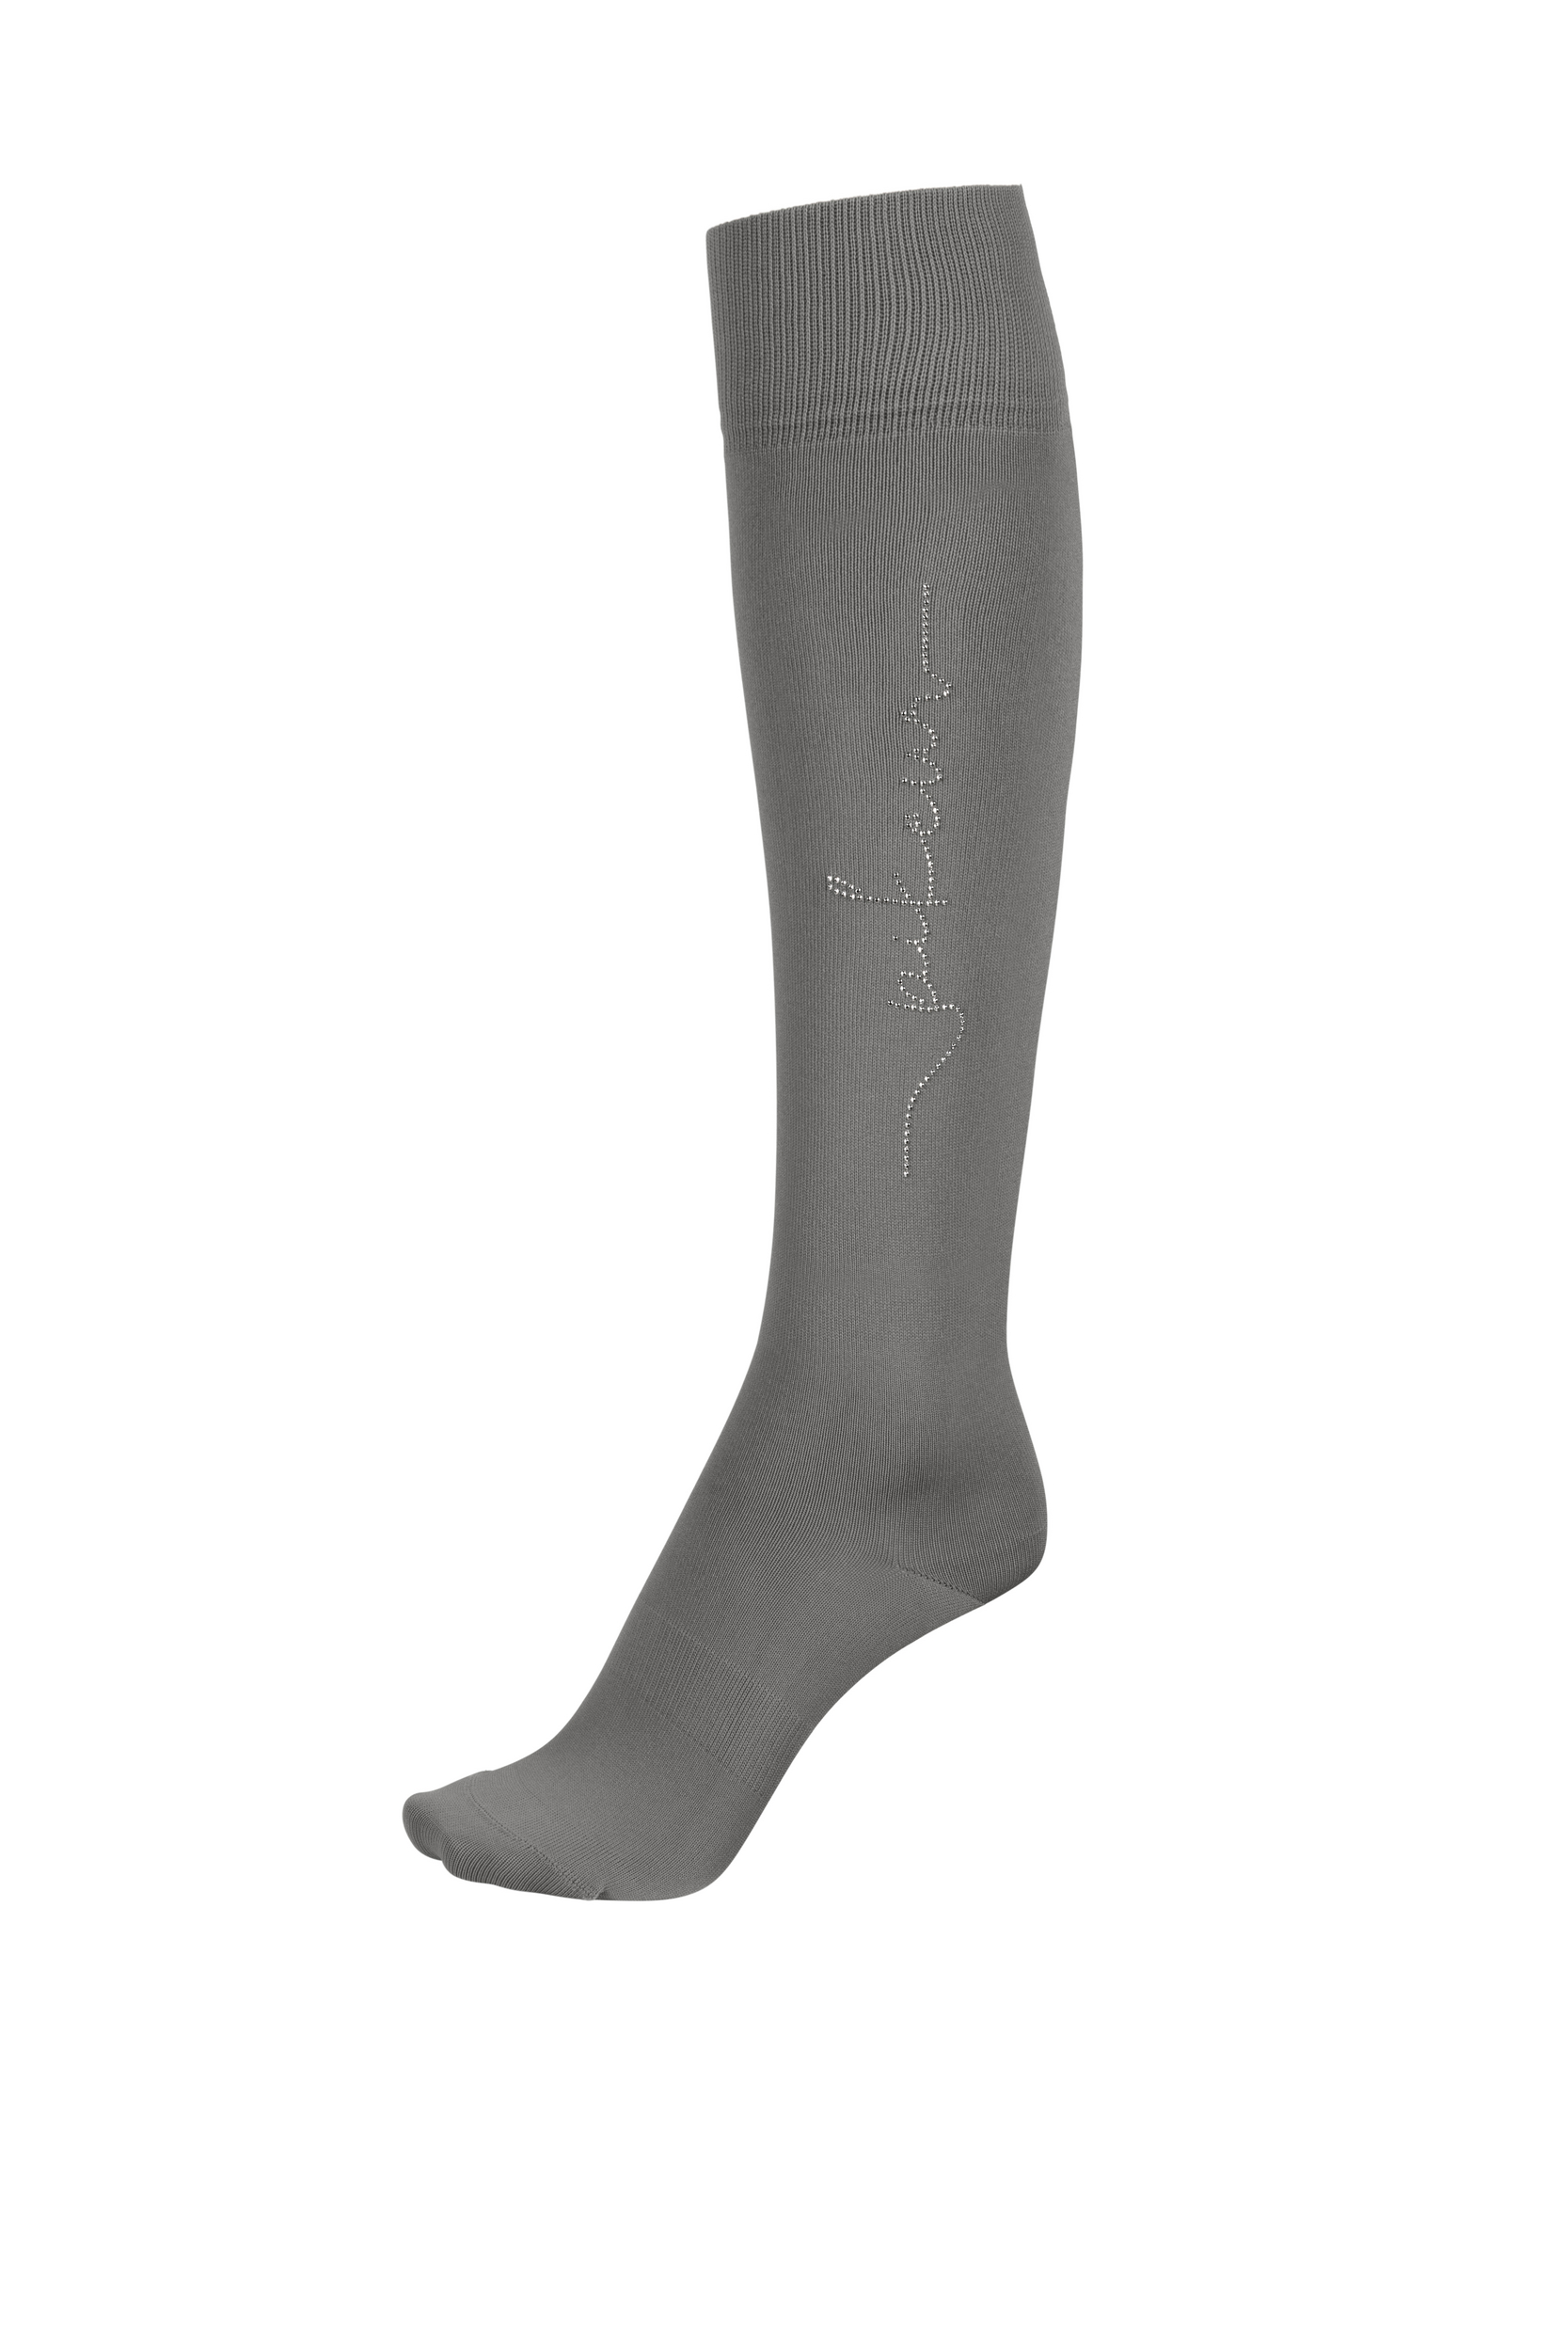 Reitsocken KNIE-STRUMPF Sportswear 22, light grey